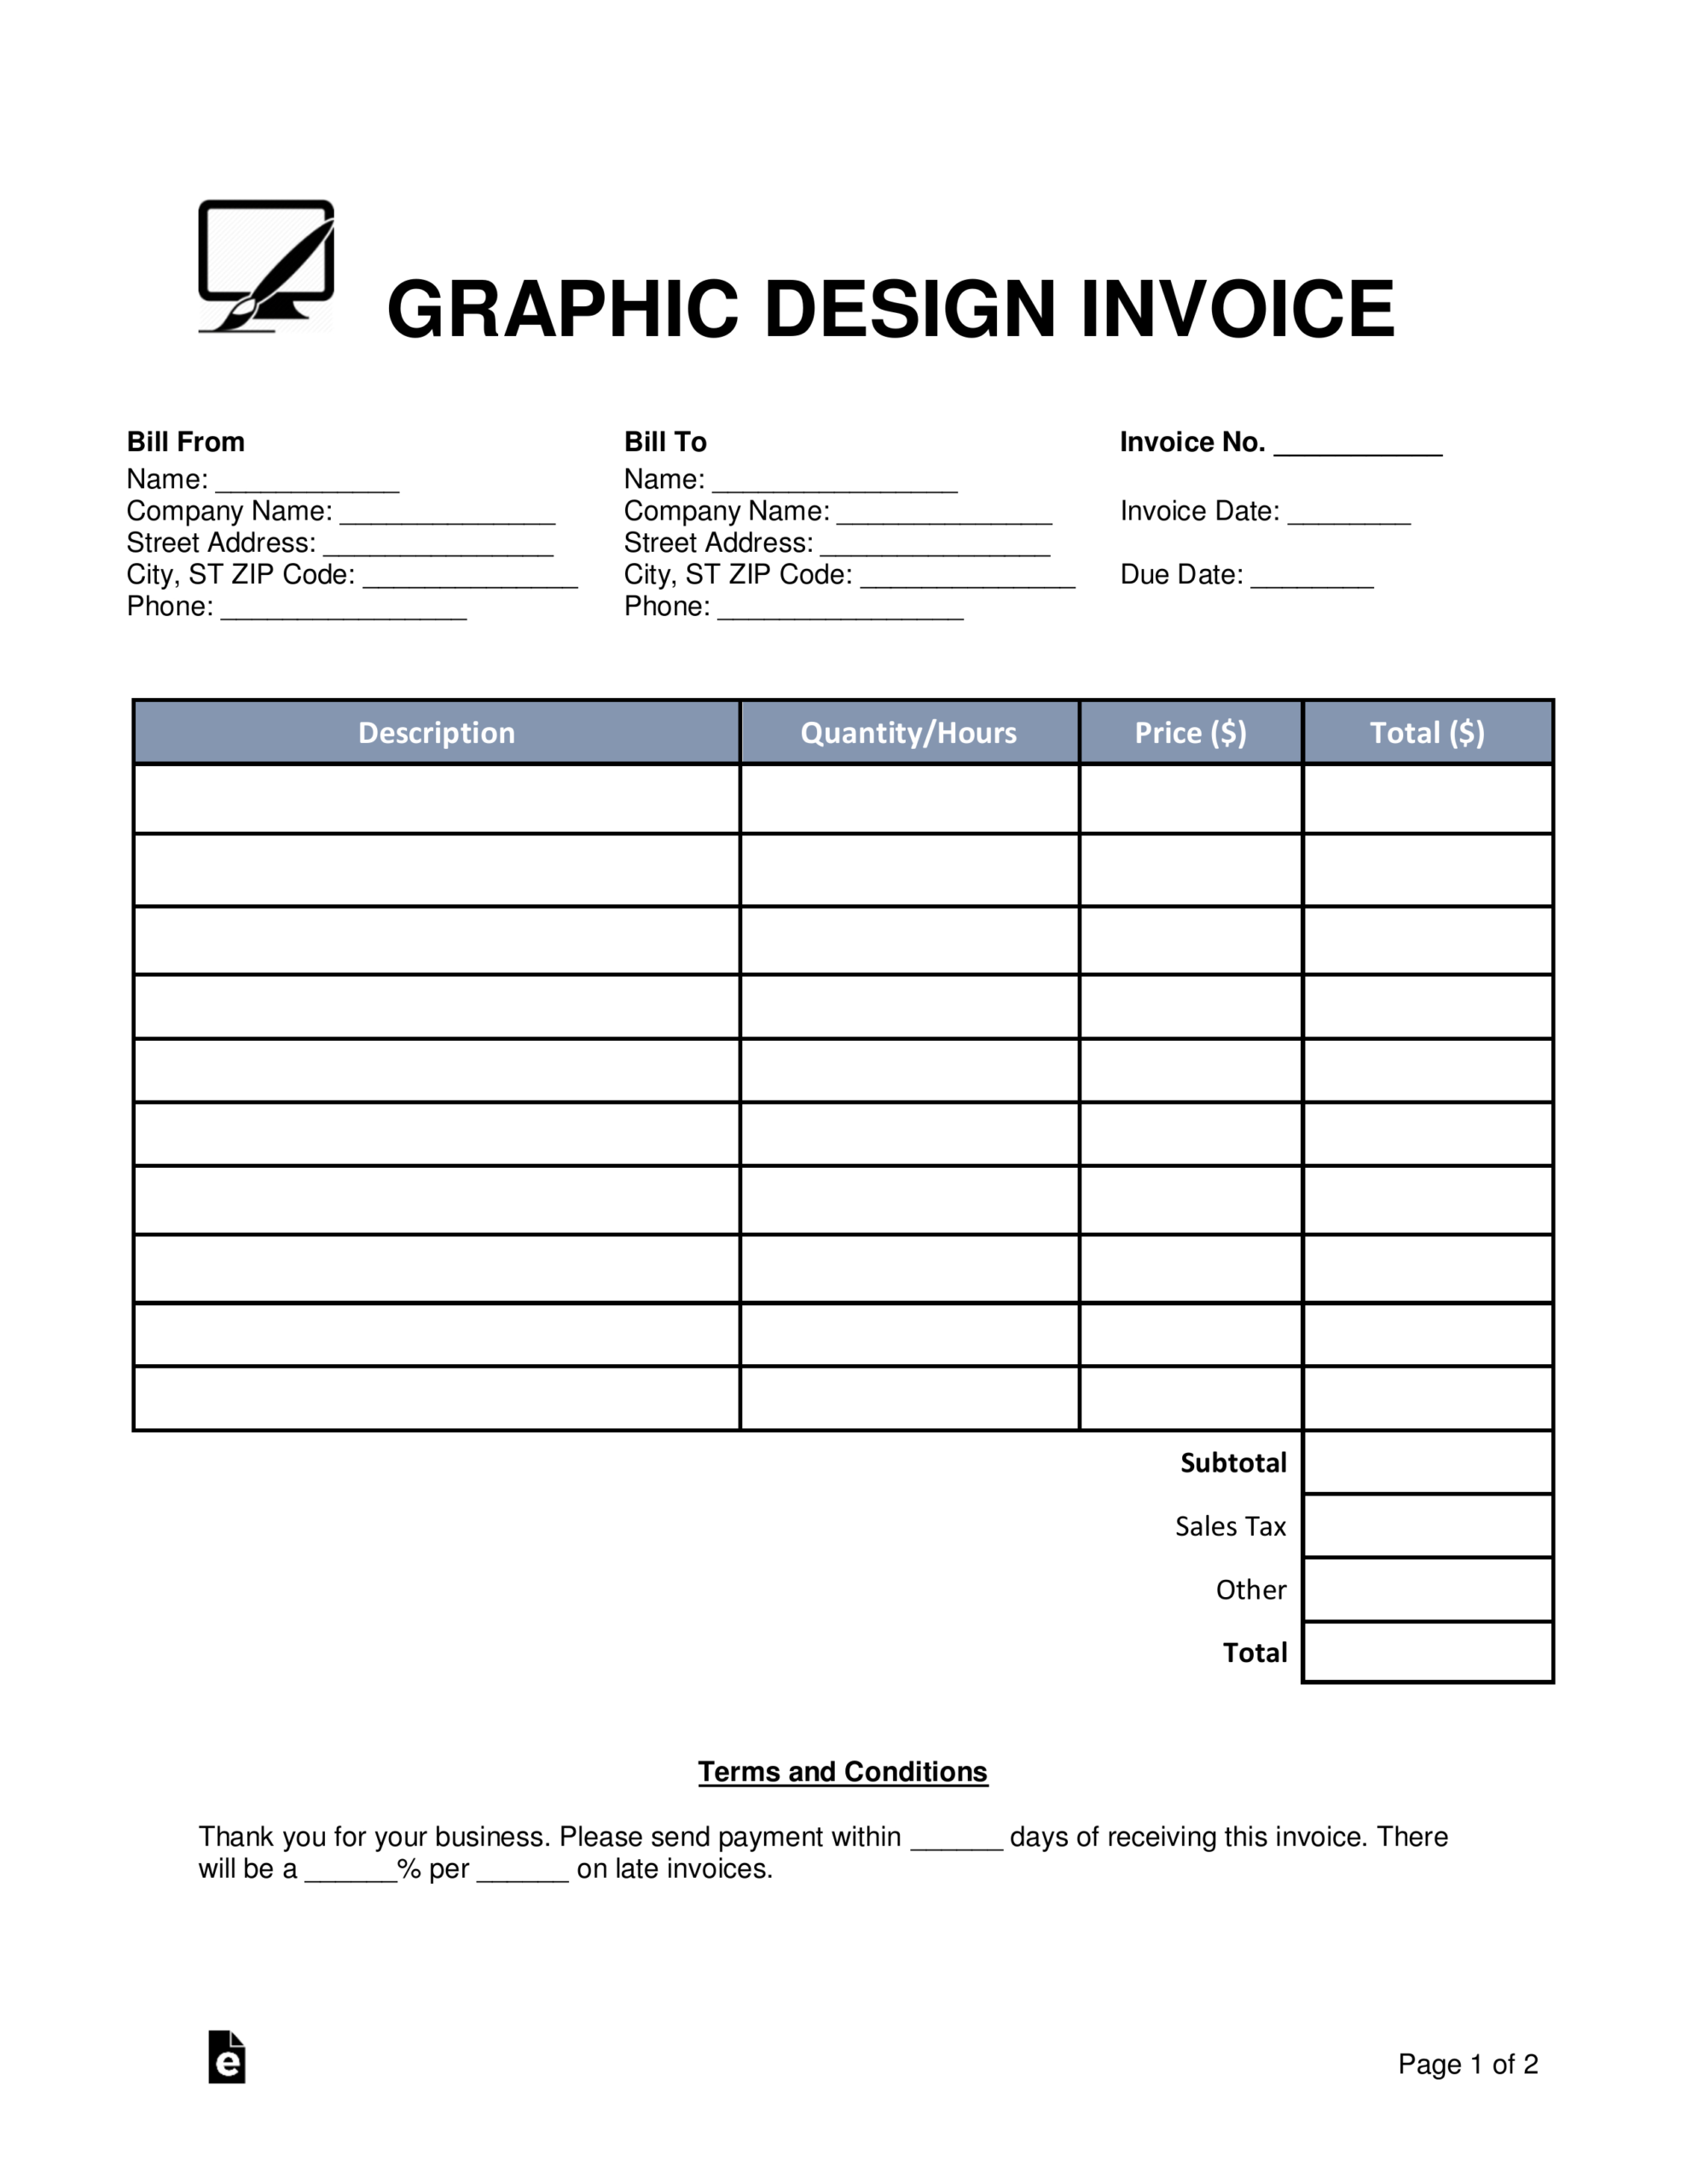 Free Graphic Design Invoice Template – Word | Pdf | Eforms For Graphic Design Invoice Template Word